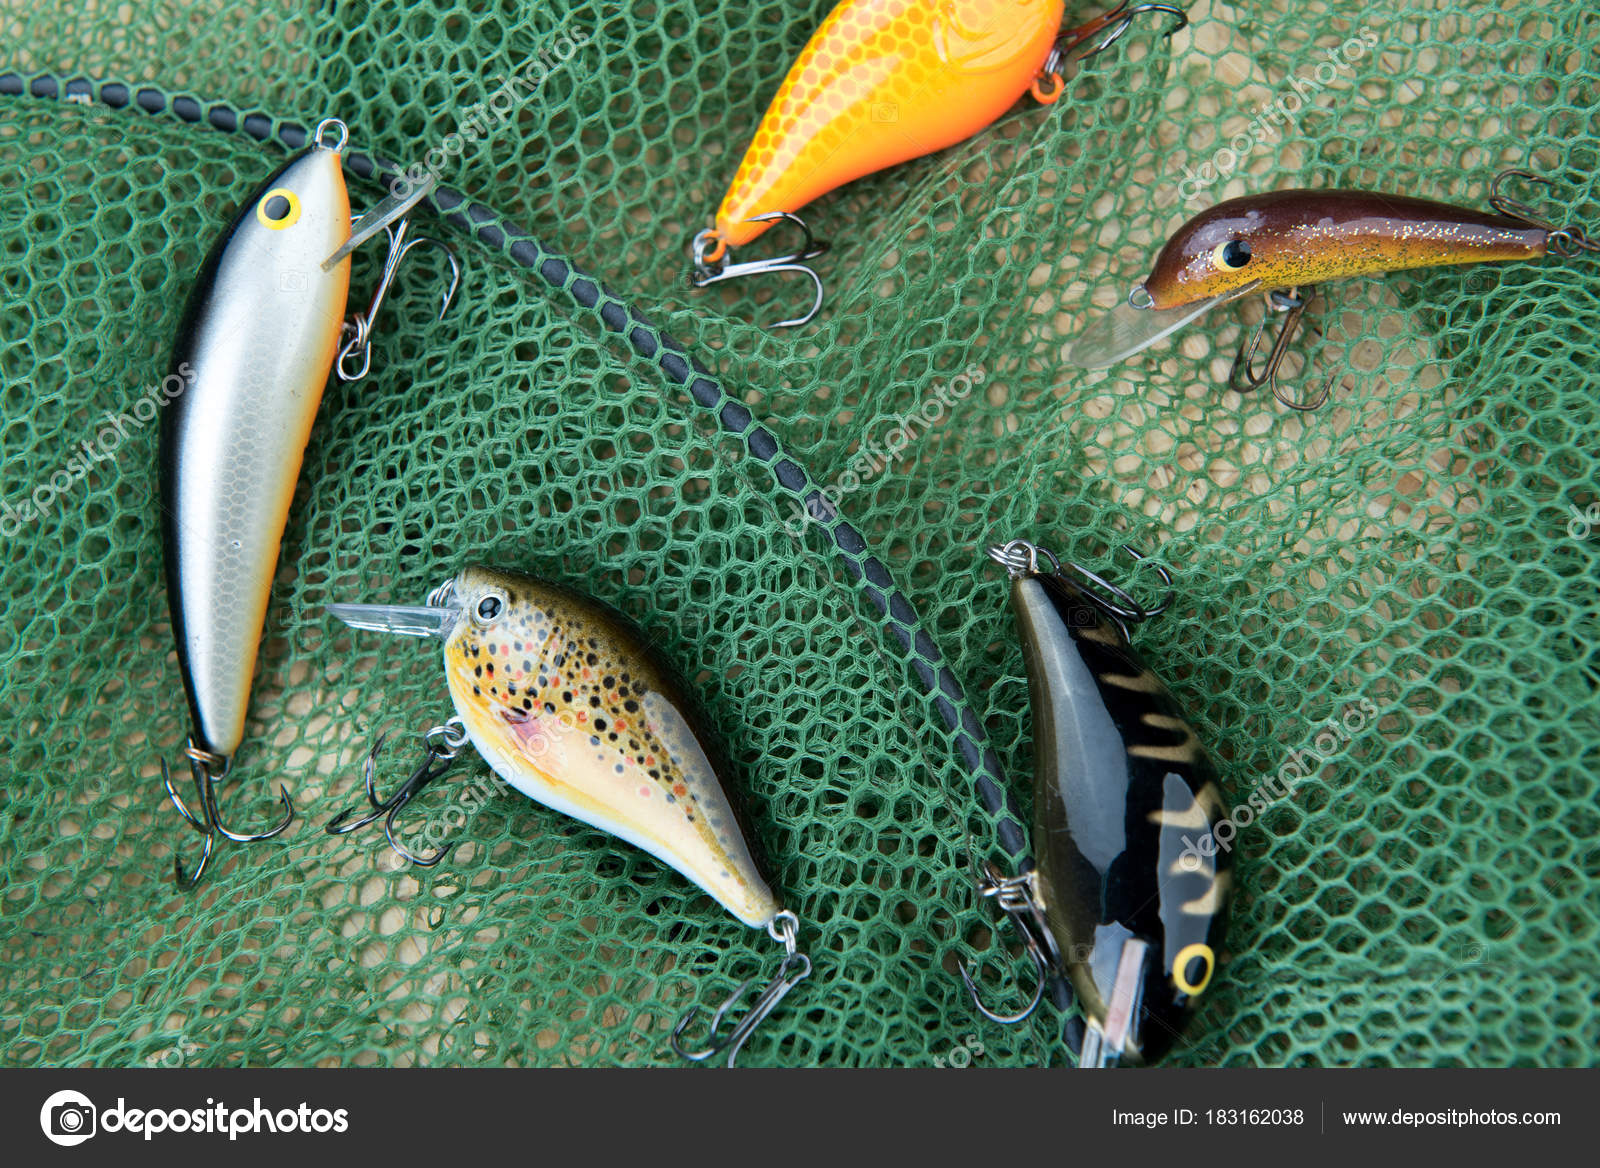 https://st3.depositphotos.com/1030278/18316/i/1600/depositphotos_183162038-stock-photo-background-fishing-accessories-place-text.jpg